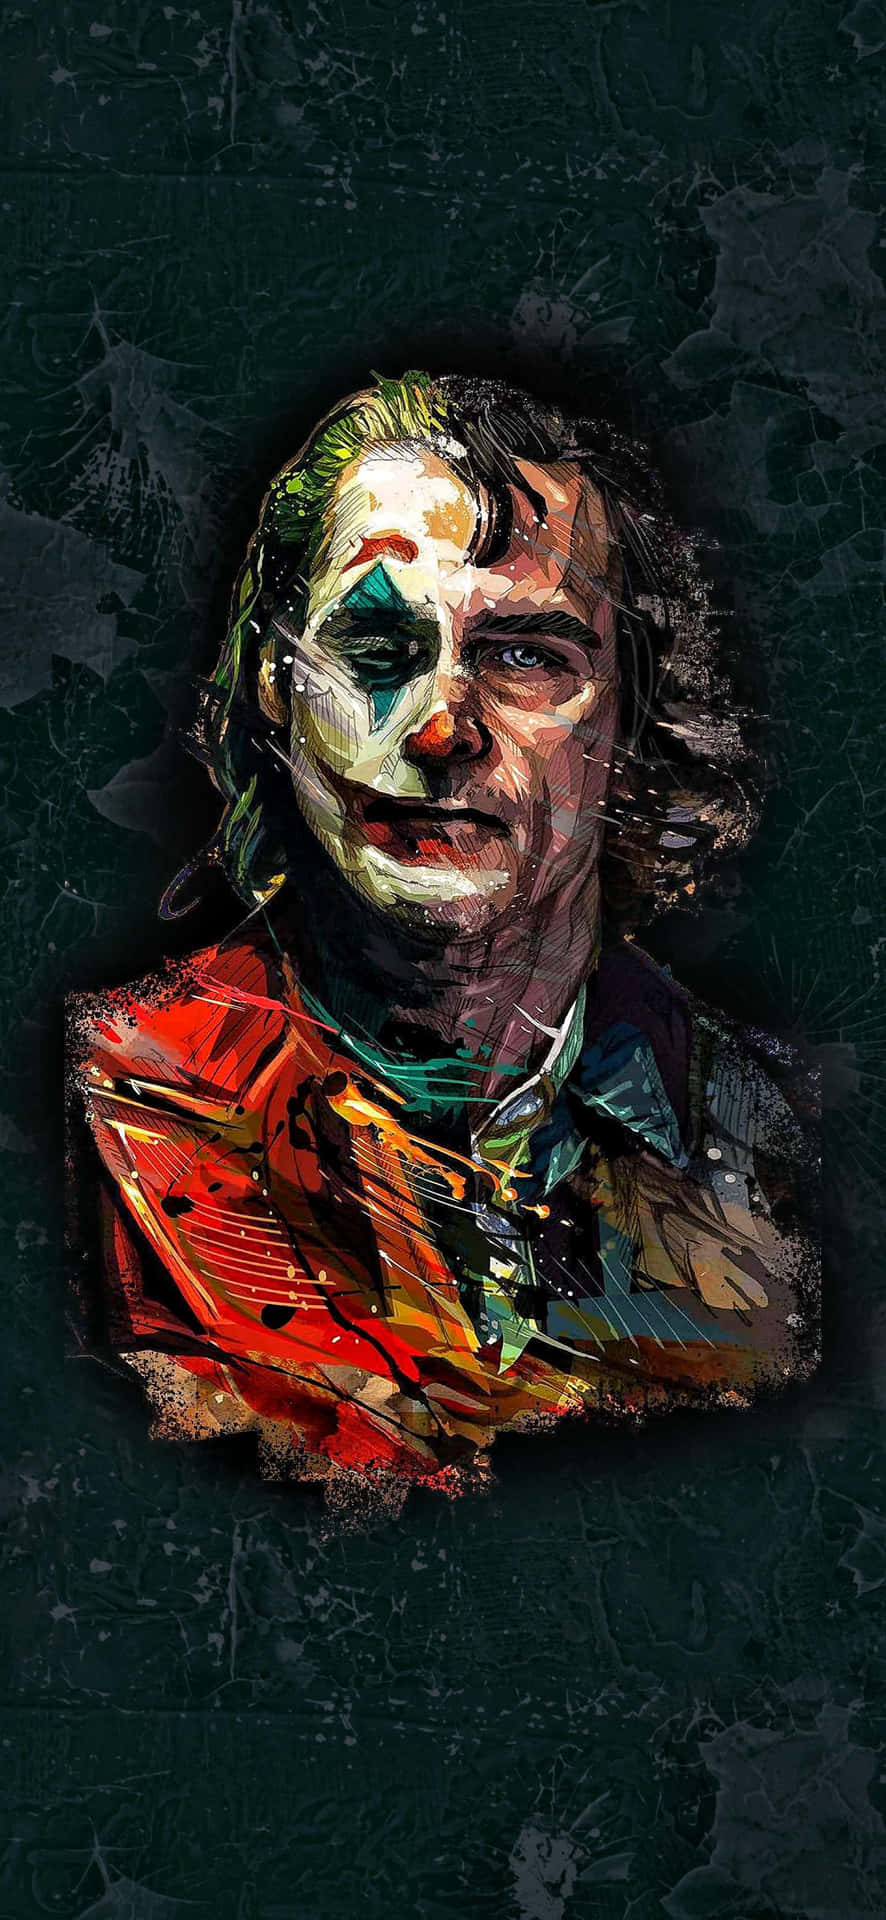 Distinctive Joker Painting on Canvas Wallpaper